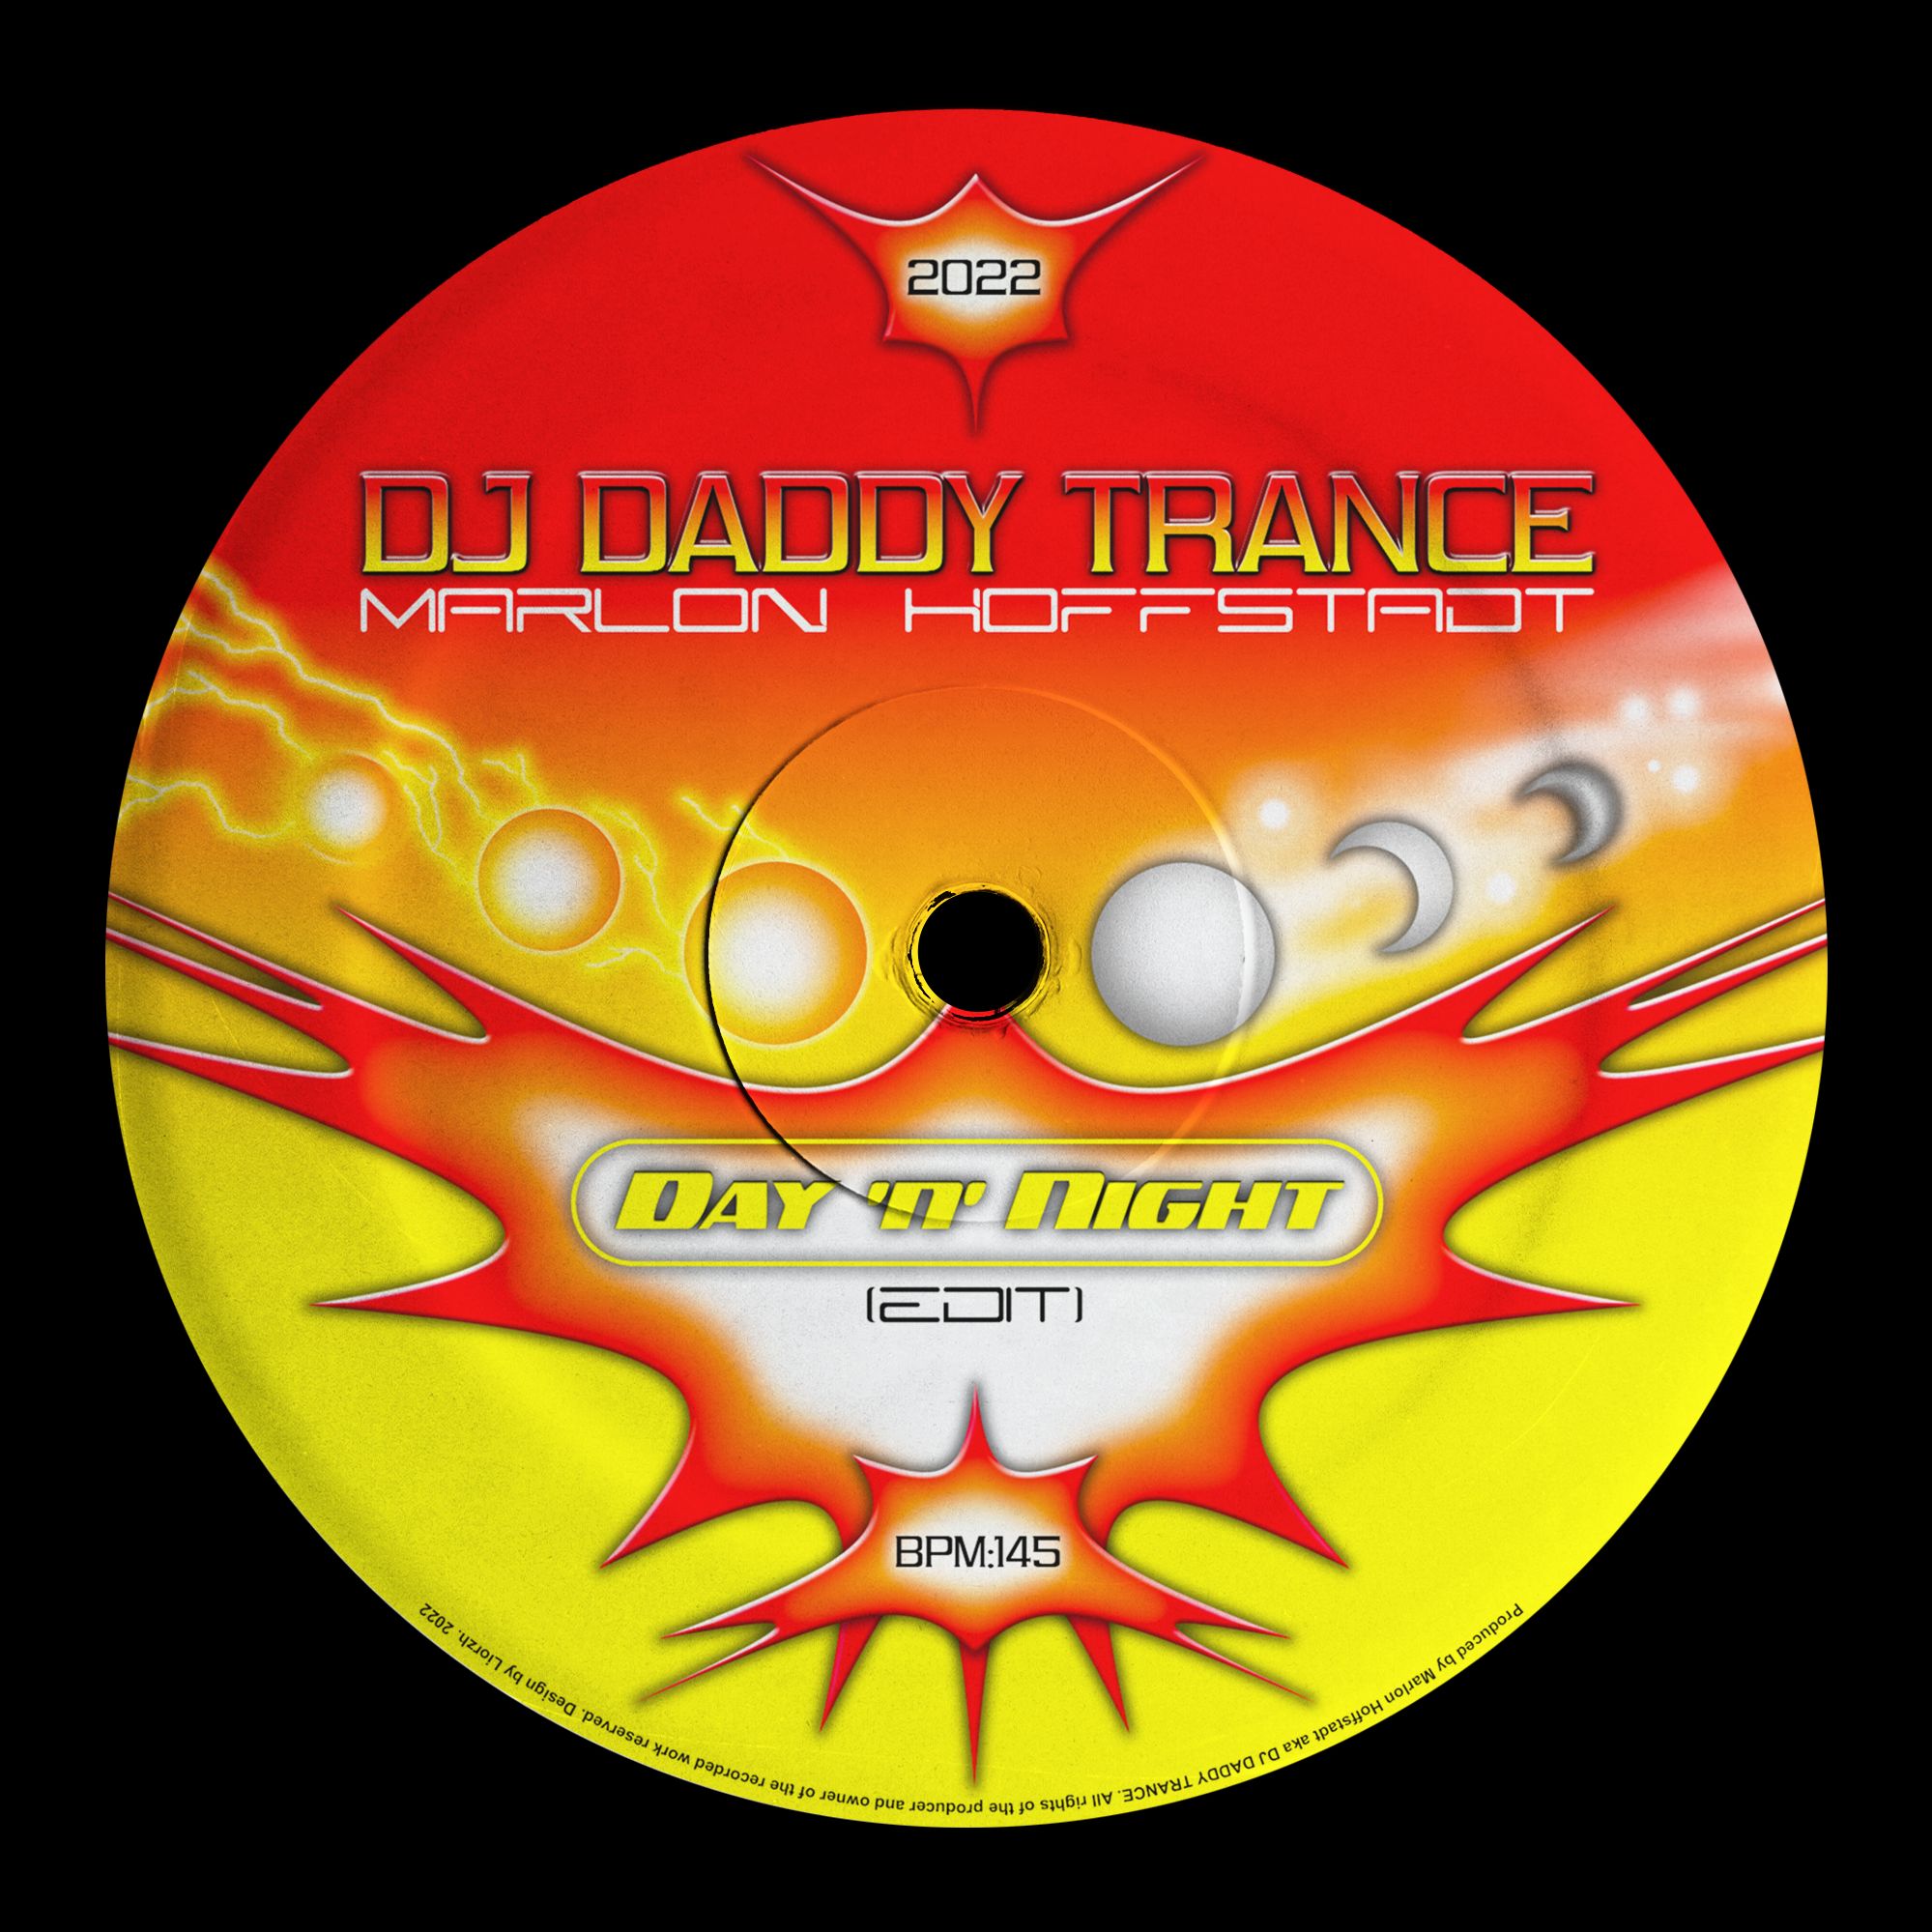 I-download DJ Daddy Trance - Day 'n' Night